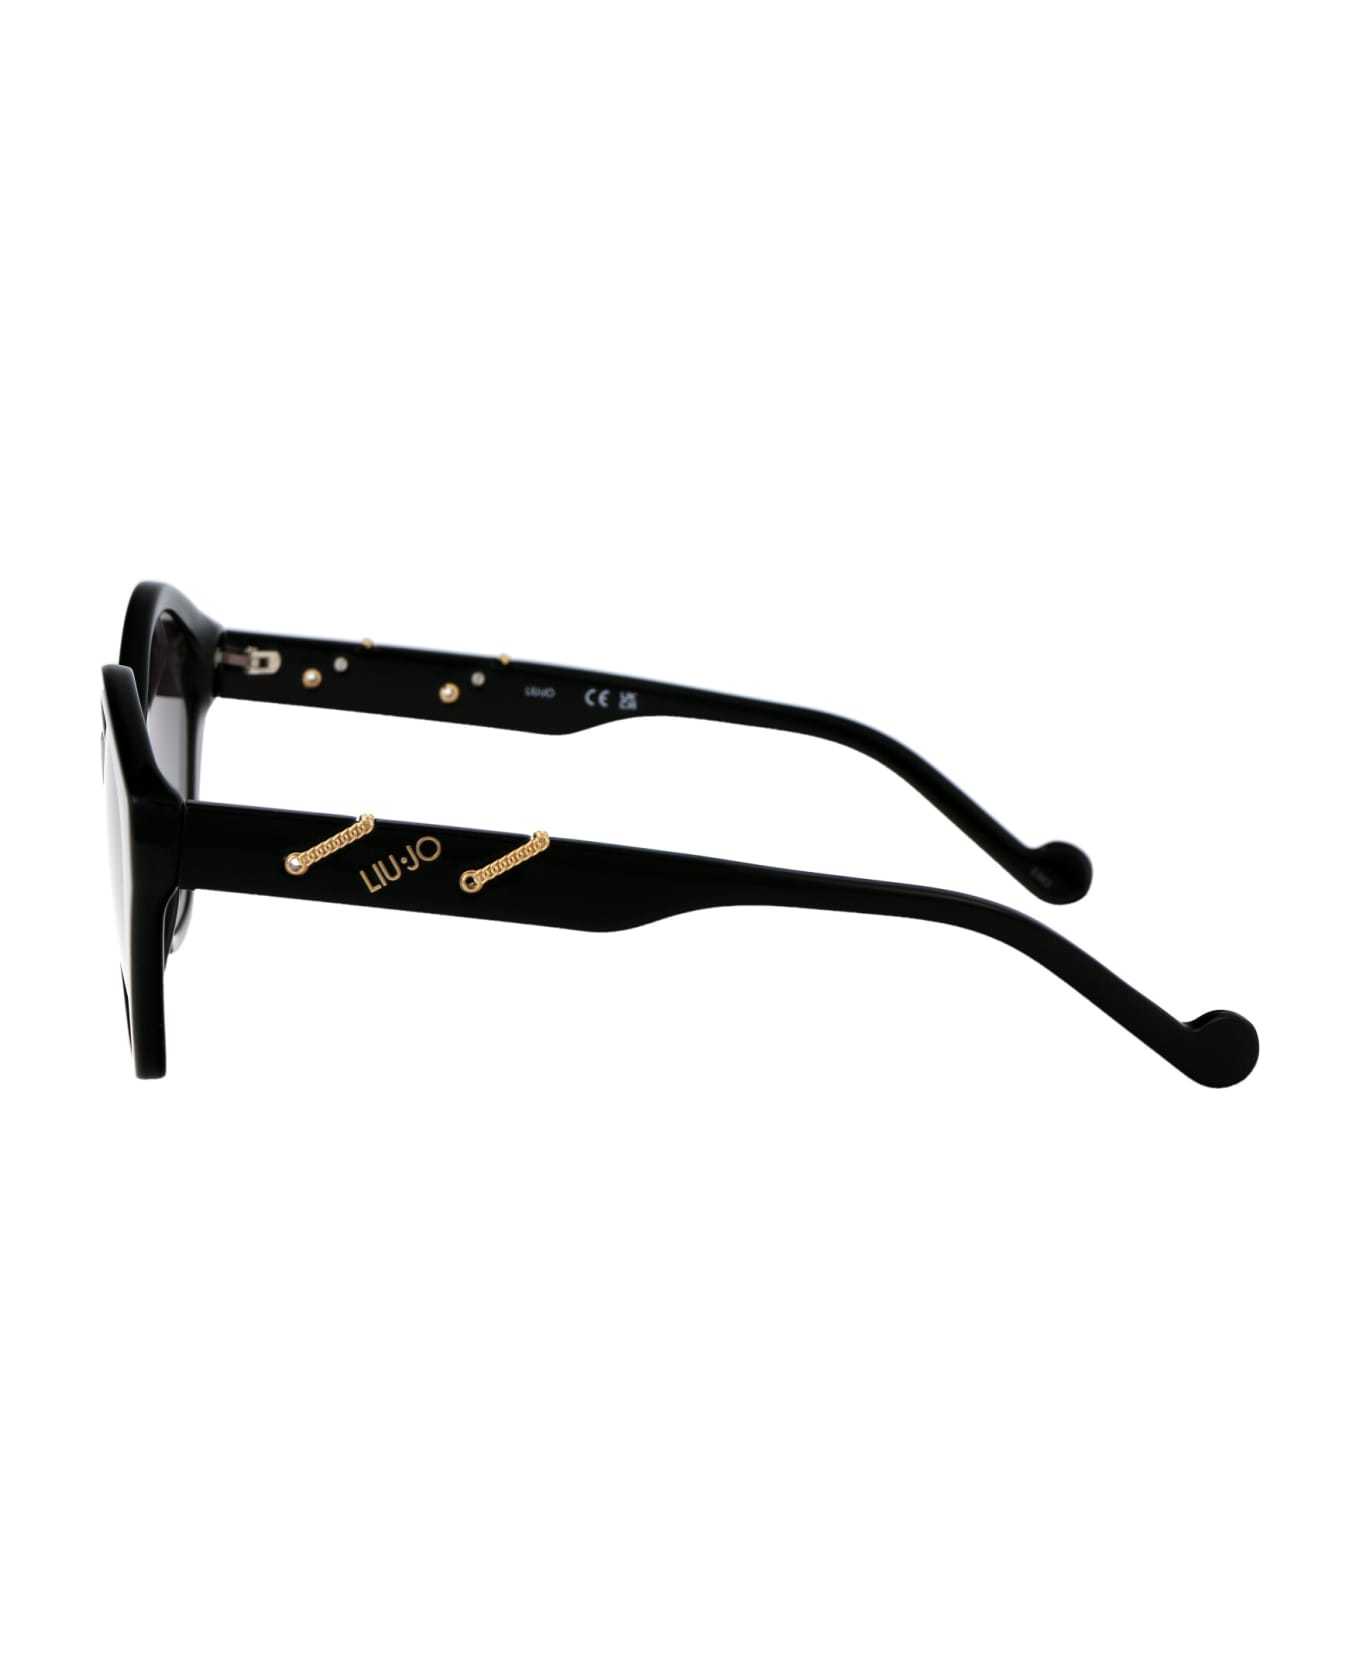 Liu-Jo Lj770s Sunglasses - 001 BLACK